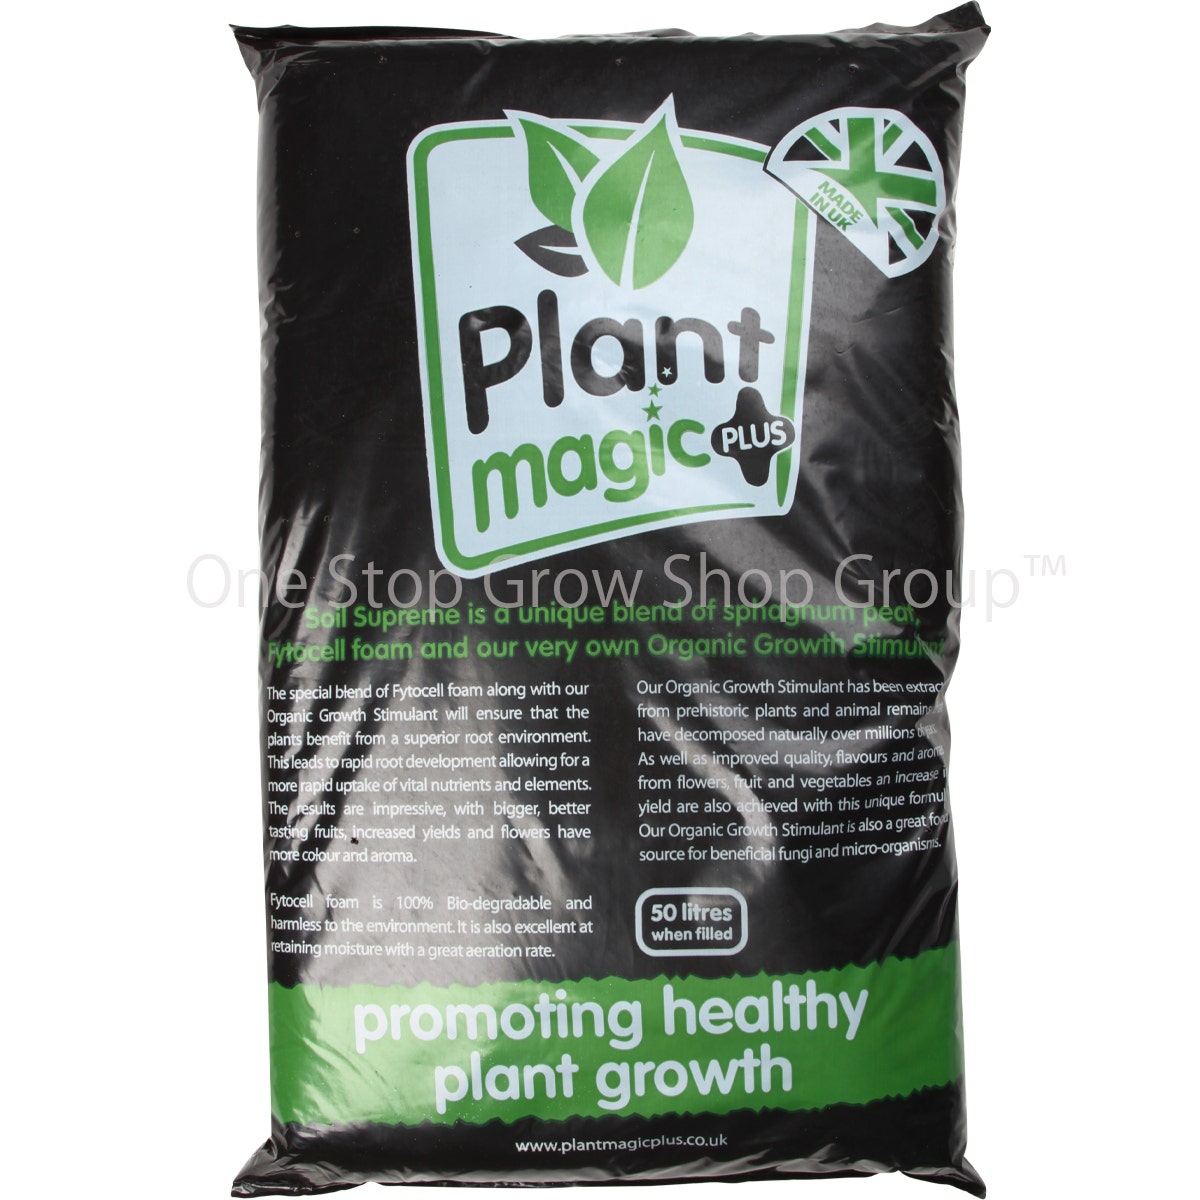 Plant Magic Plus Soil Supreme 50 Litres